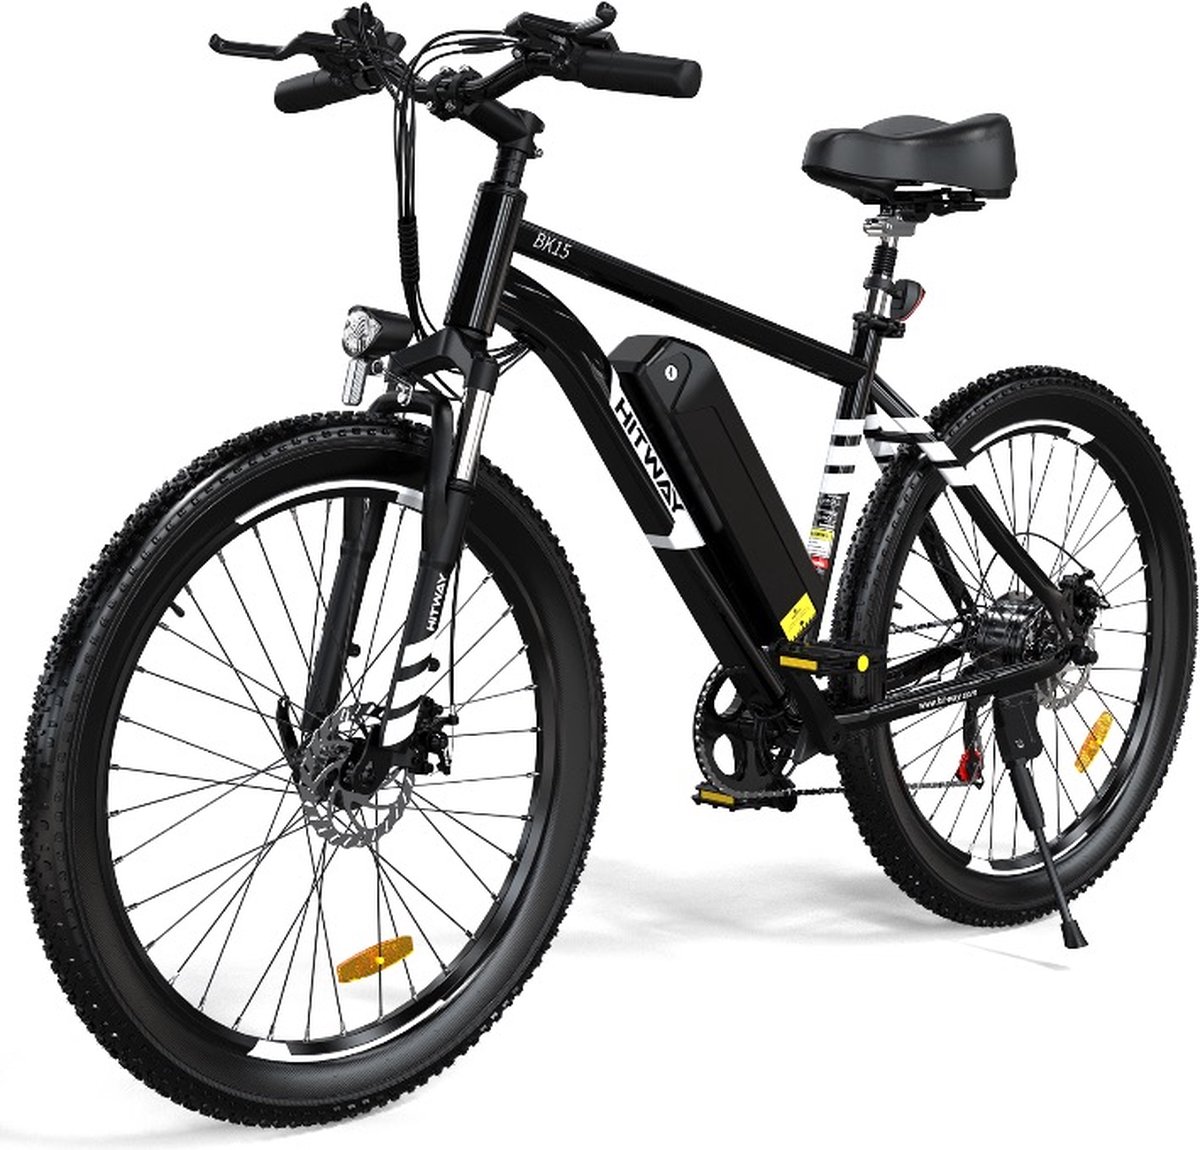 P4B - Elektrische fiets - E-bike - Stadsfiets - Elektrische Mountainbike - Fiets - 1 Jaar Garantie - Legaal openbare weg